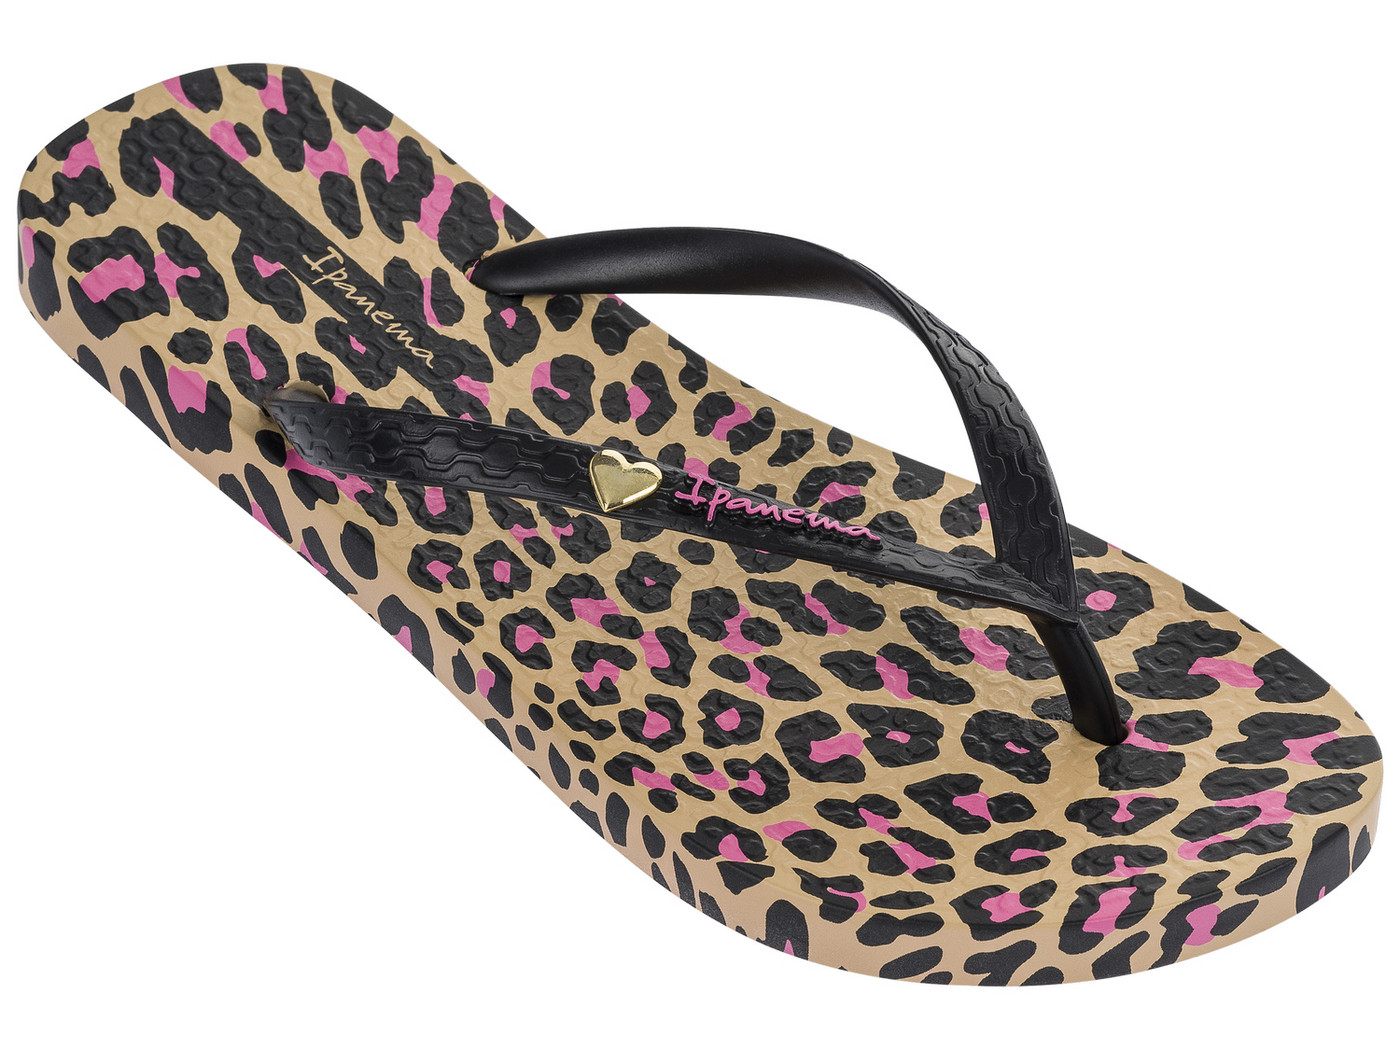 Flip-flops for ladies by Ipanema